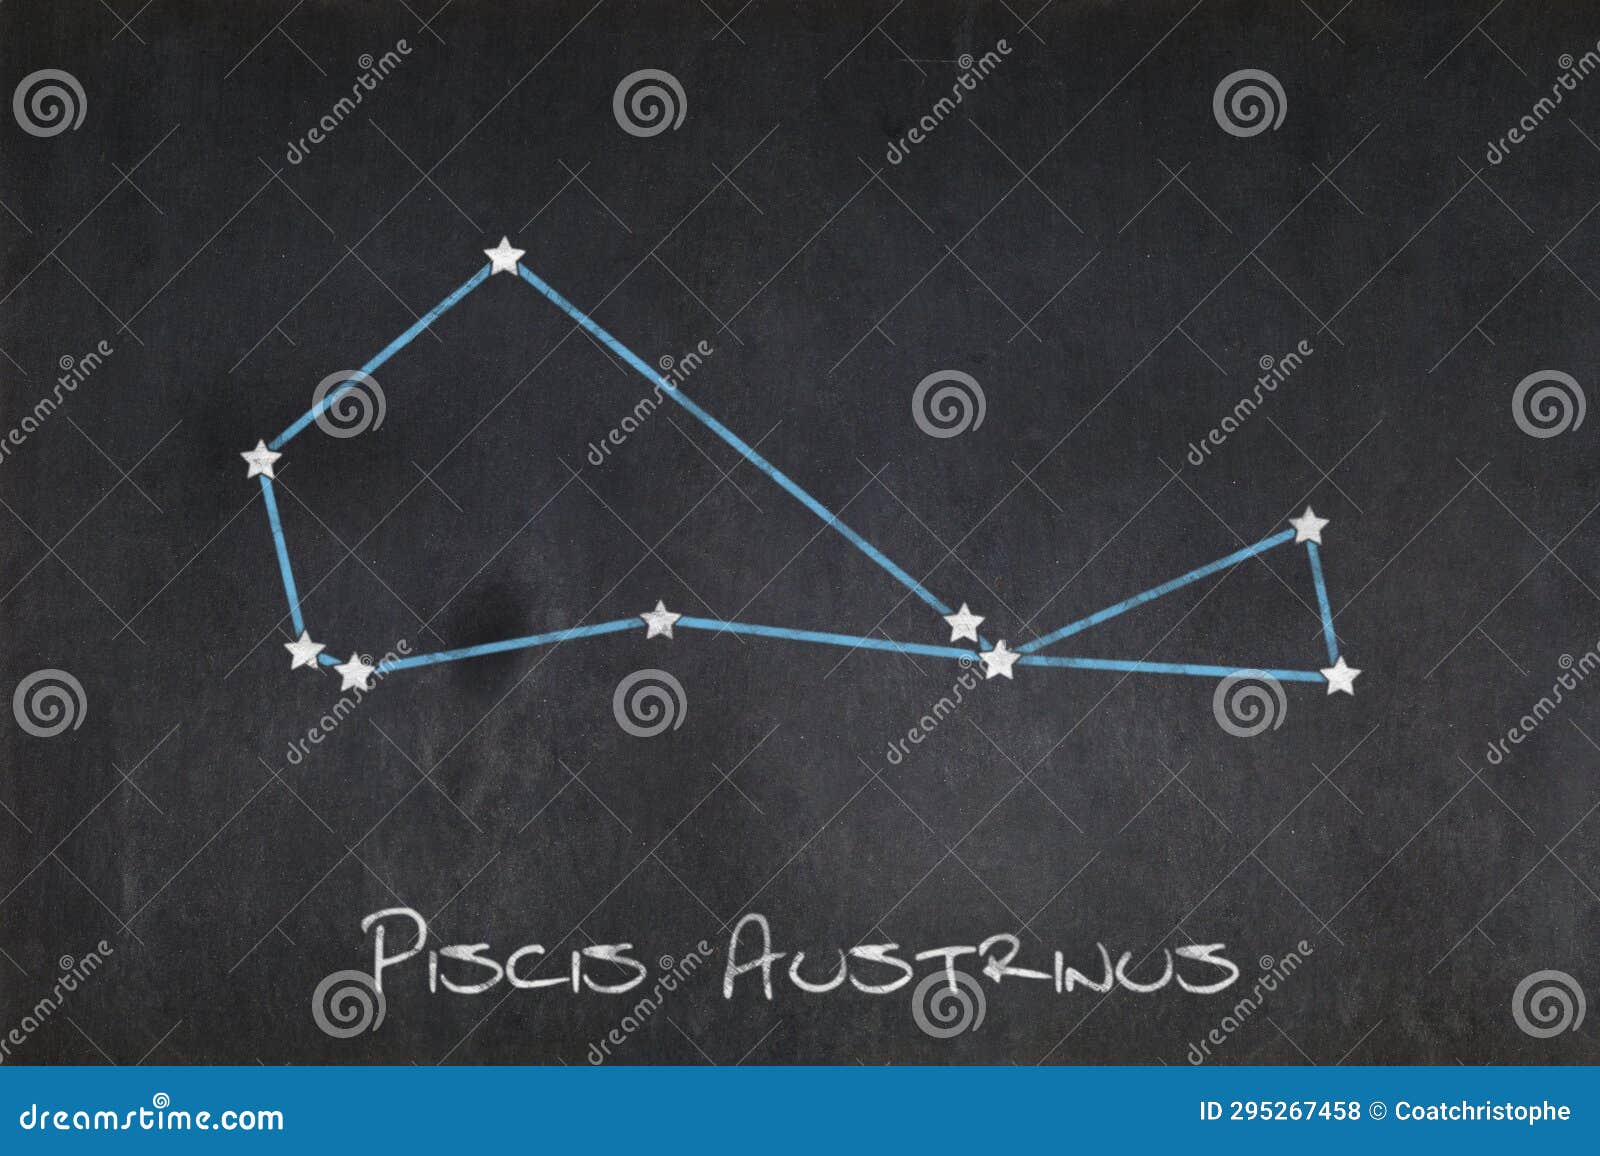 piscis austrinus constellation drawn on a blackboard